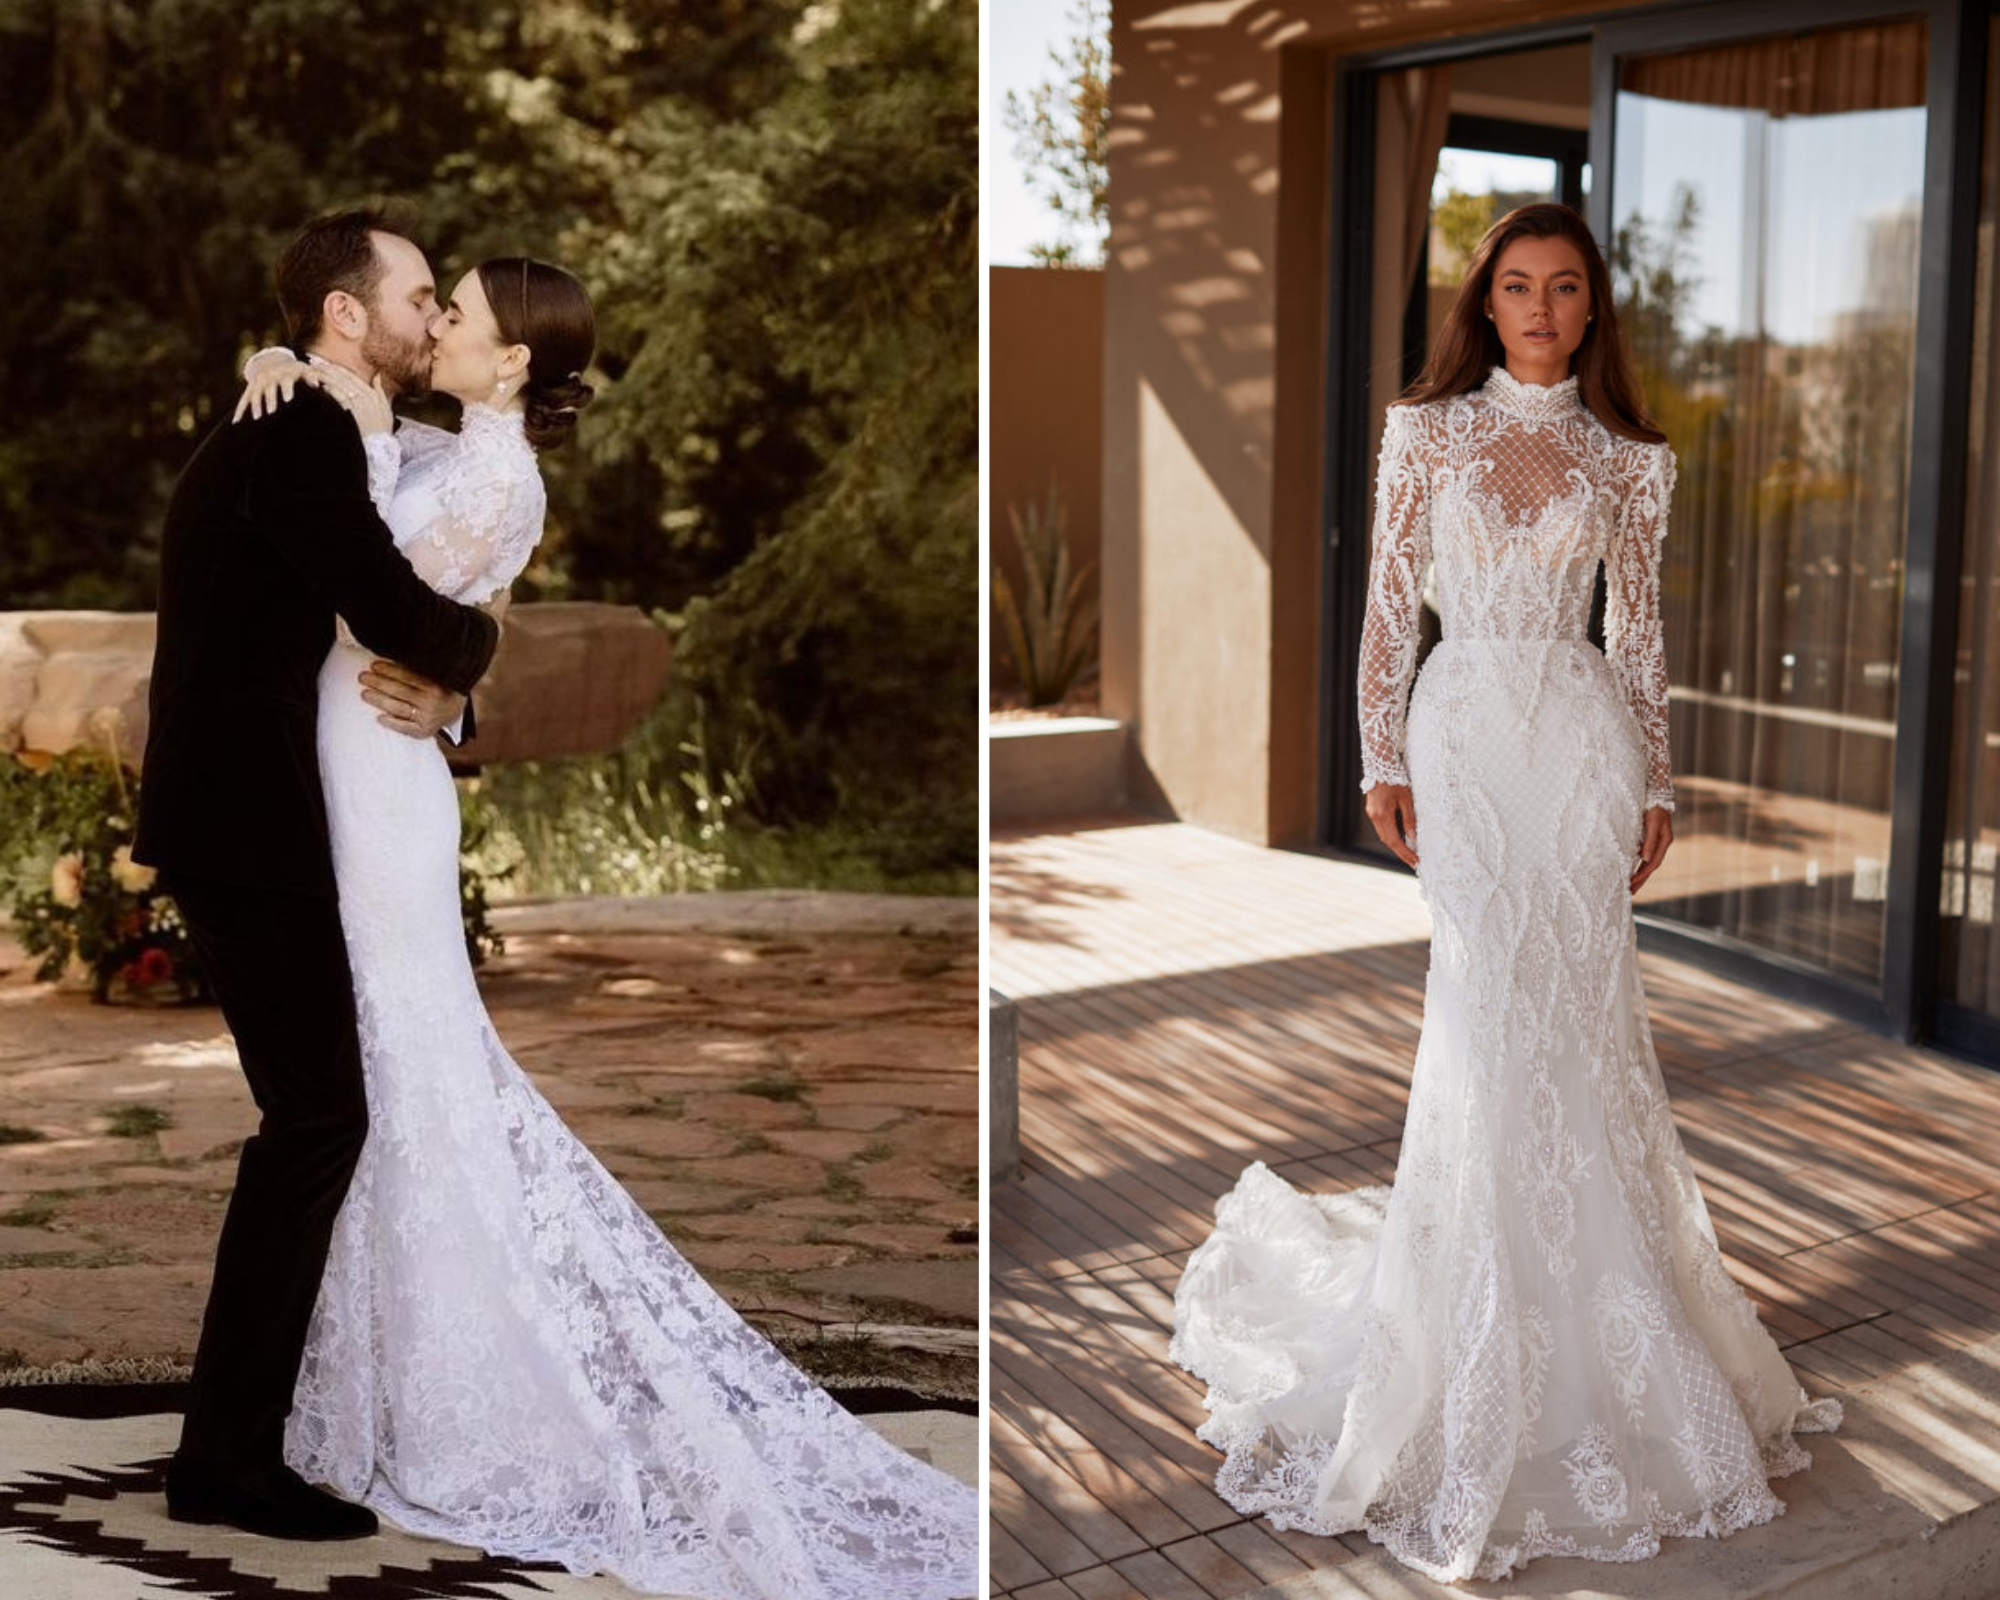 Get The Look: 9 Sleeve Wedding Dresses Inspired by Lily Collins Vintage  Bridal Look - Wedding Journal